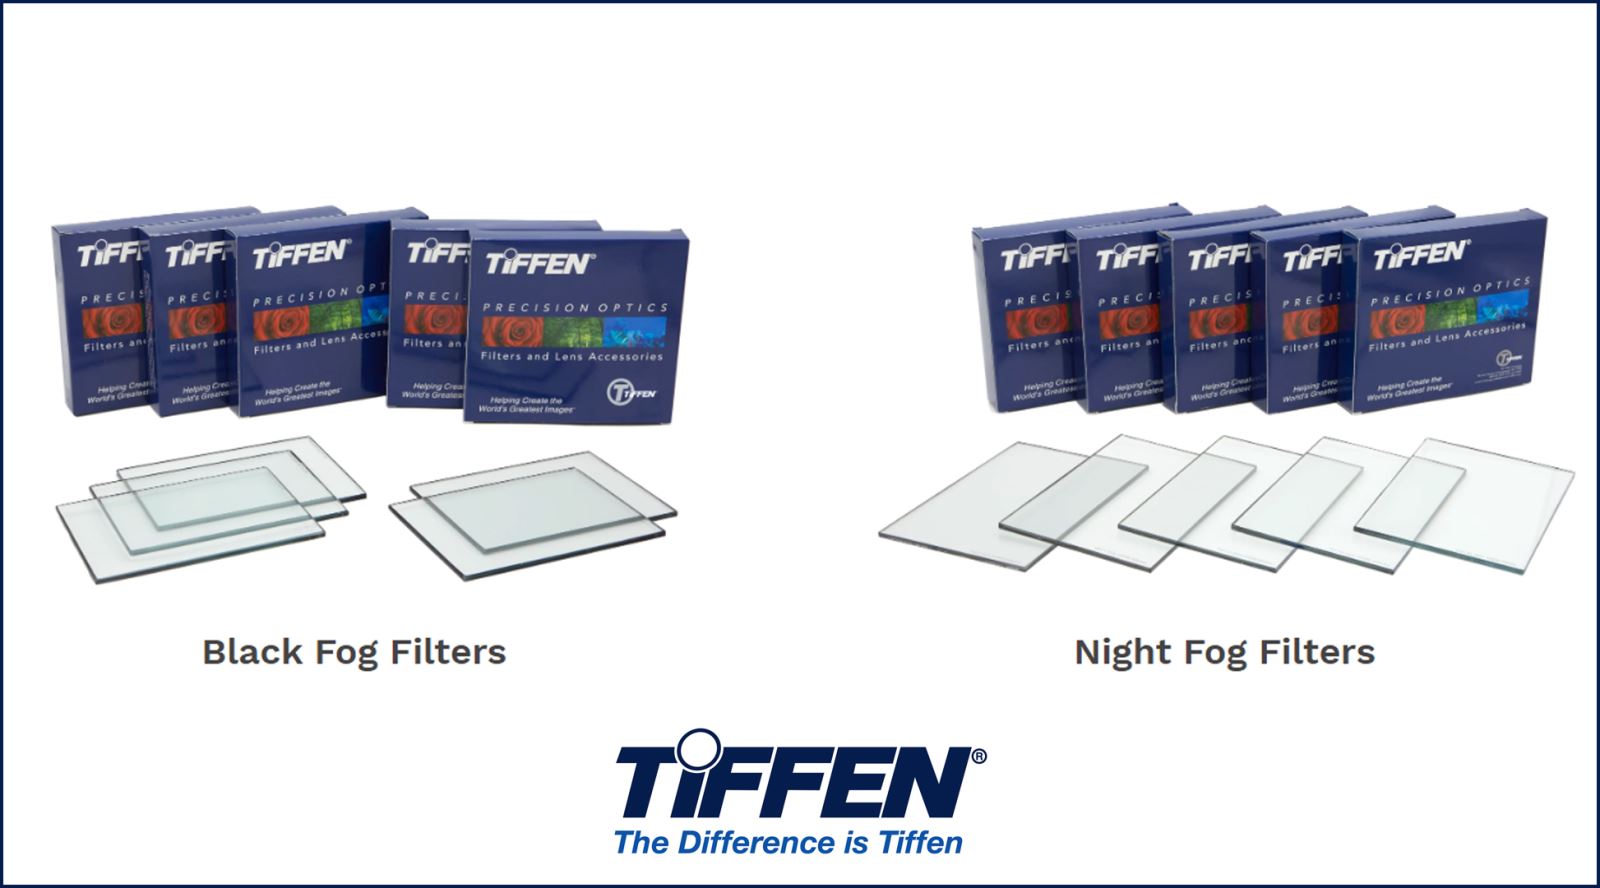 Tiffen Black Fog and Night Fog Filters